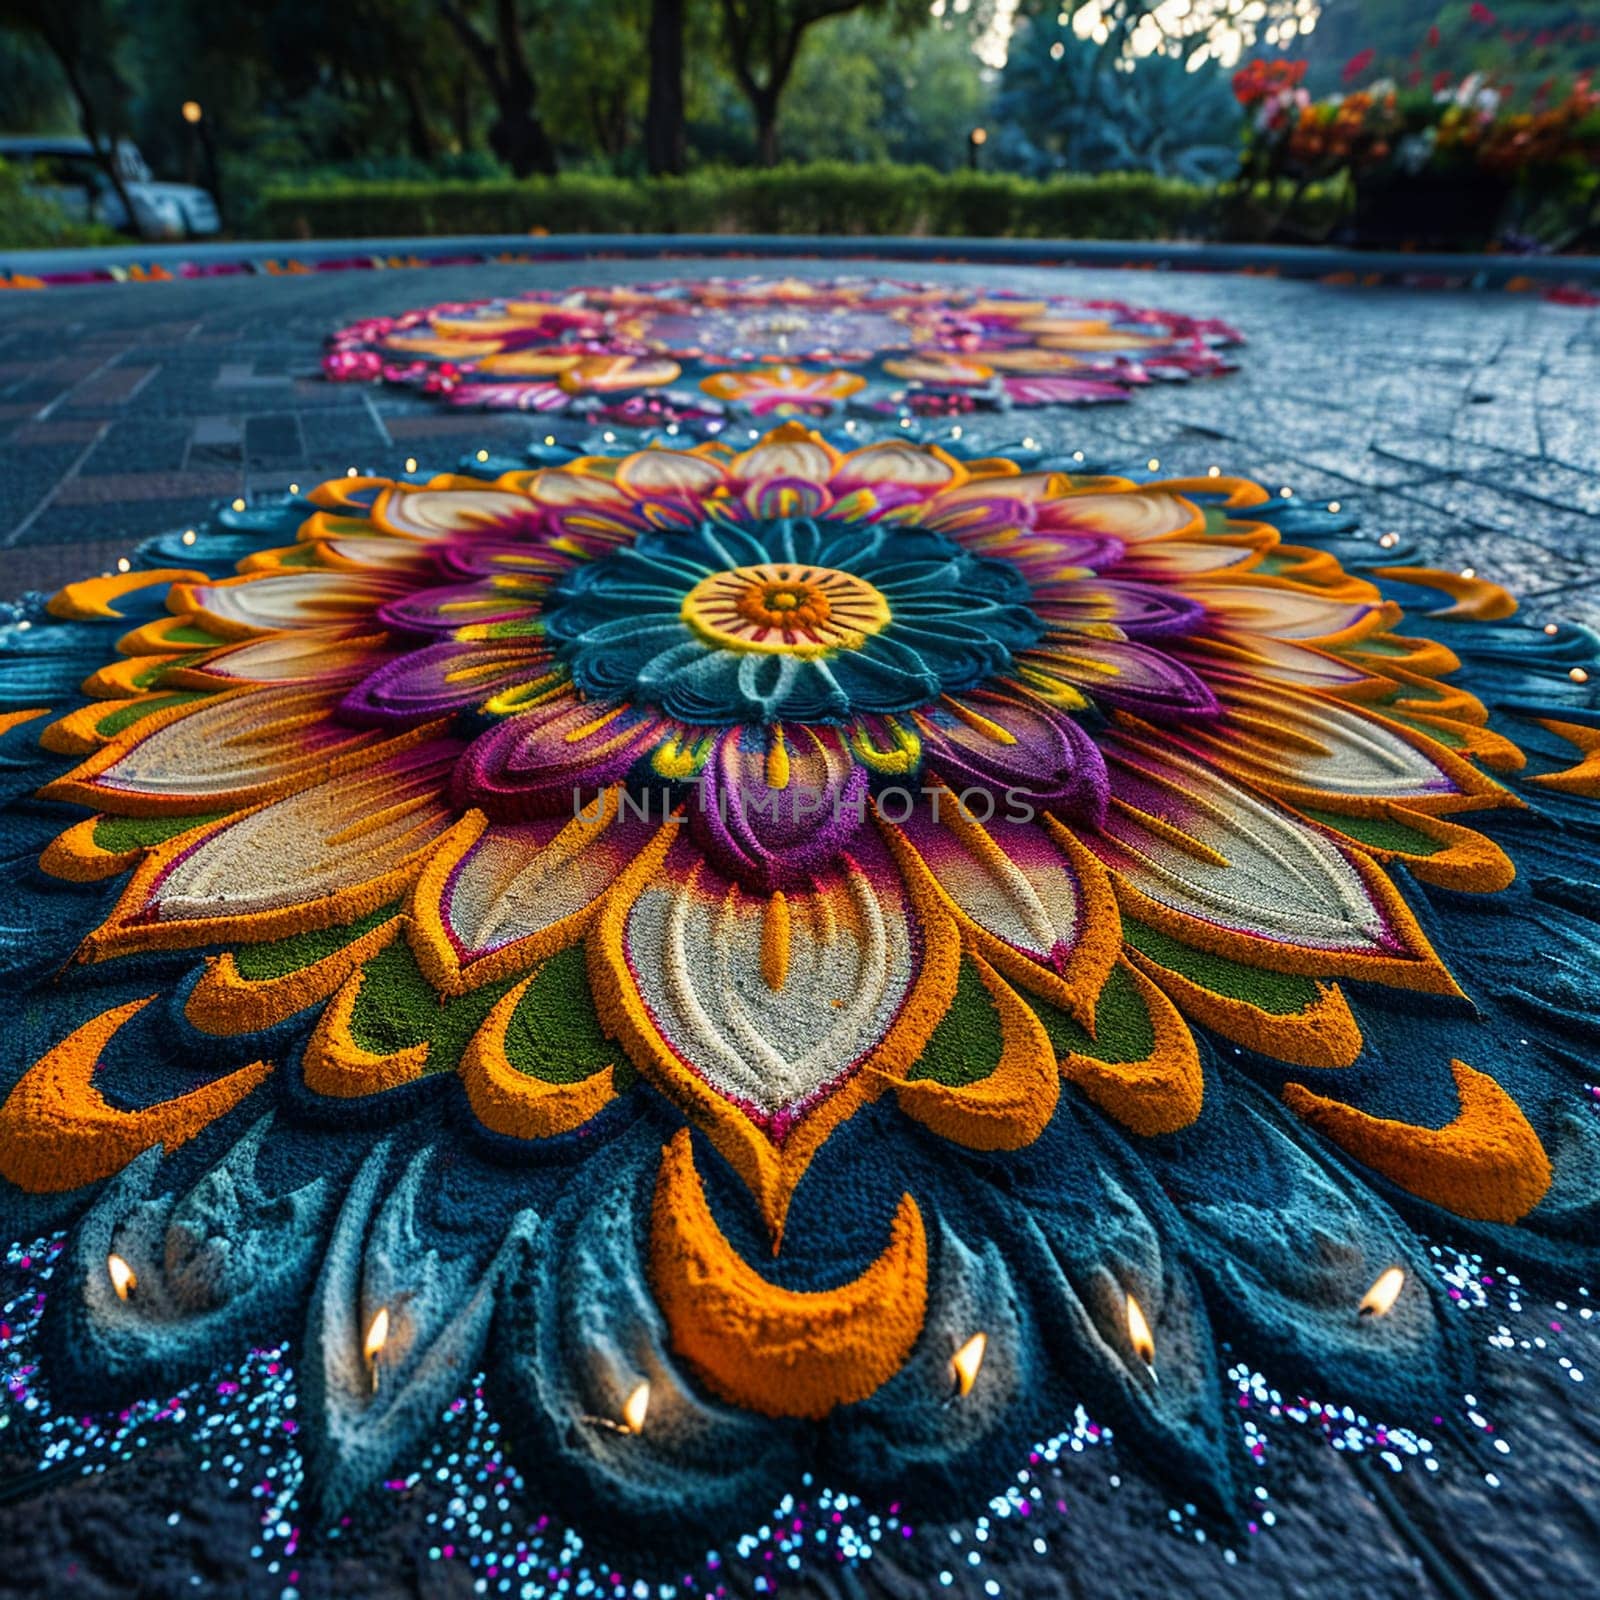 Colorful Hindu Festival Rangoli Blurring into Artistic Devotion by Benzoix